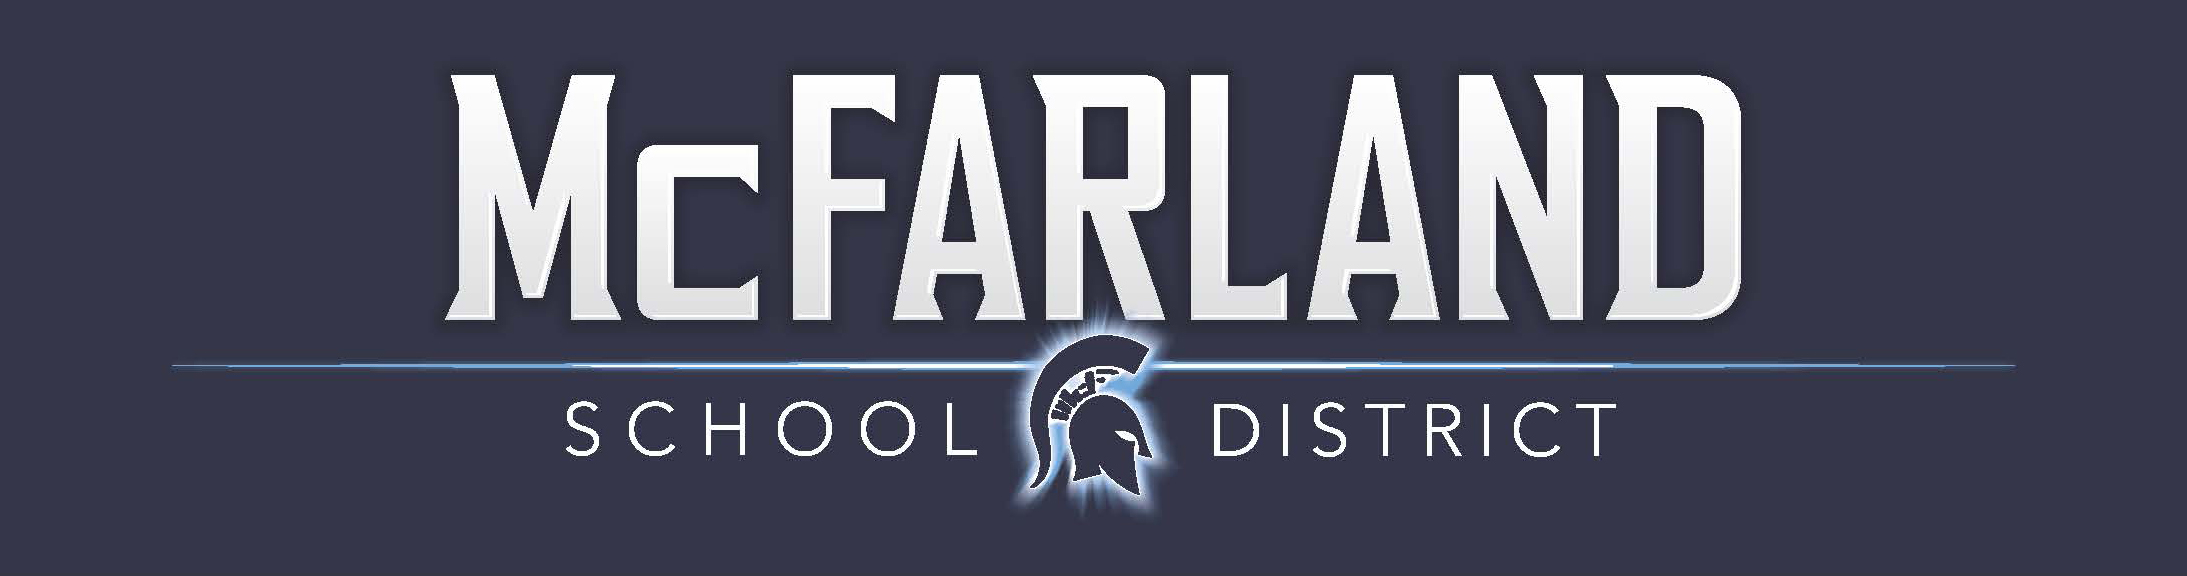 McFarland School District Logo